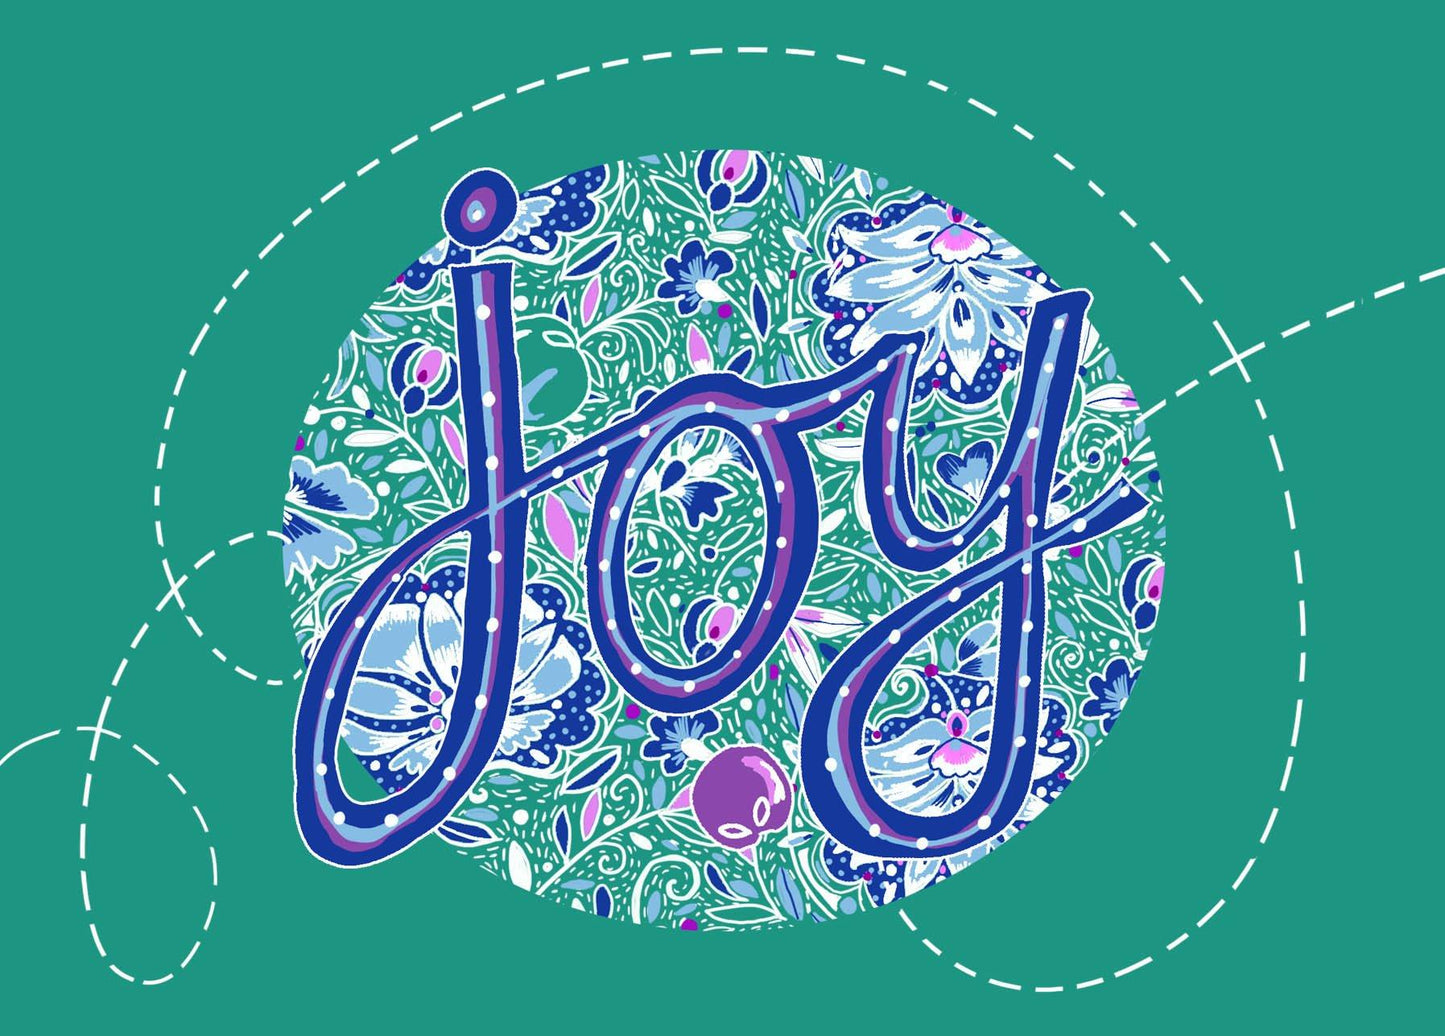 "Joy" by Emily Kelly - Framed Print